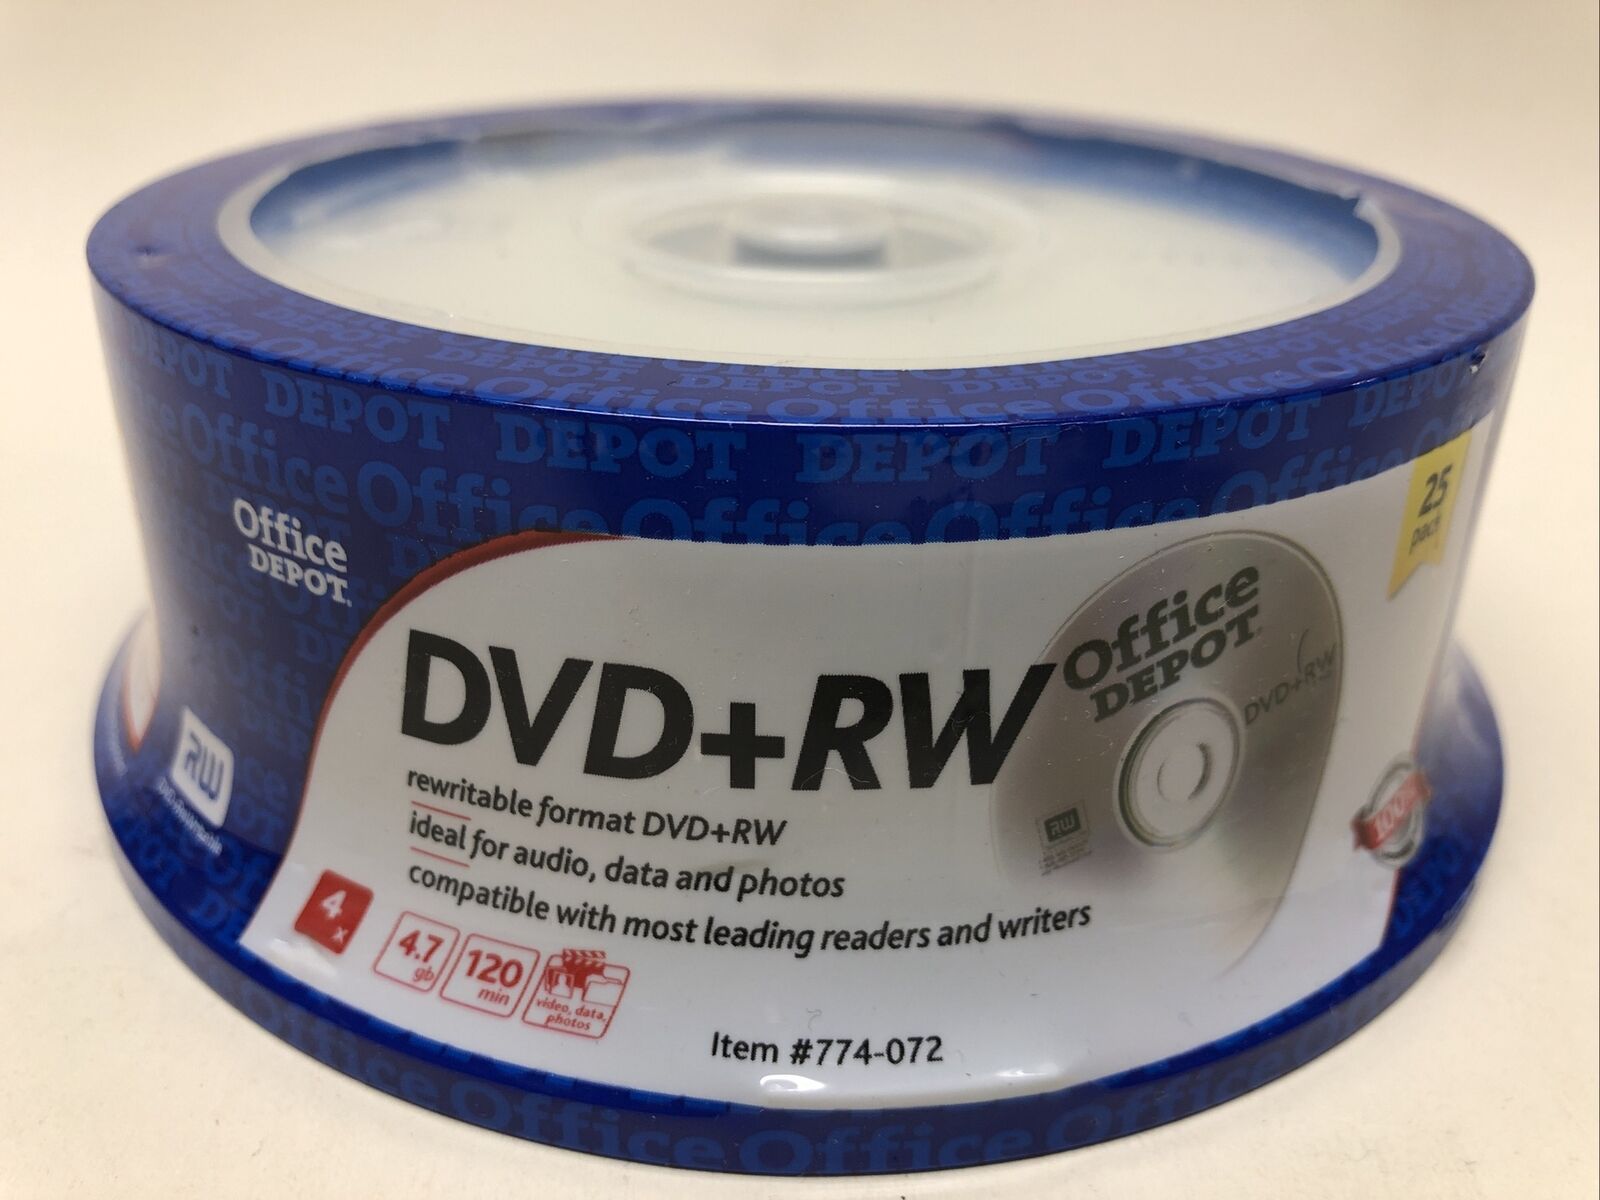 New 25 Pack Office Depot DVD+RW 4.7GB 4x Speed Rewritable Blank Discs